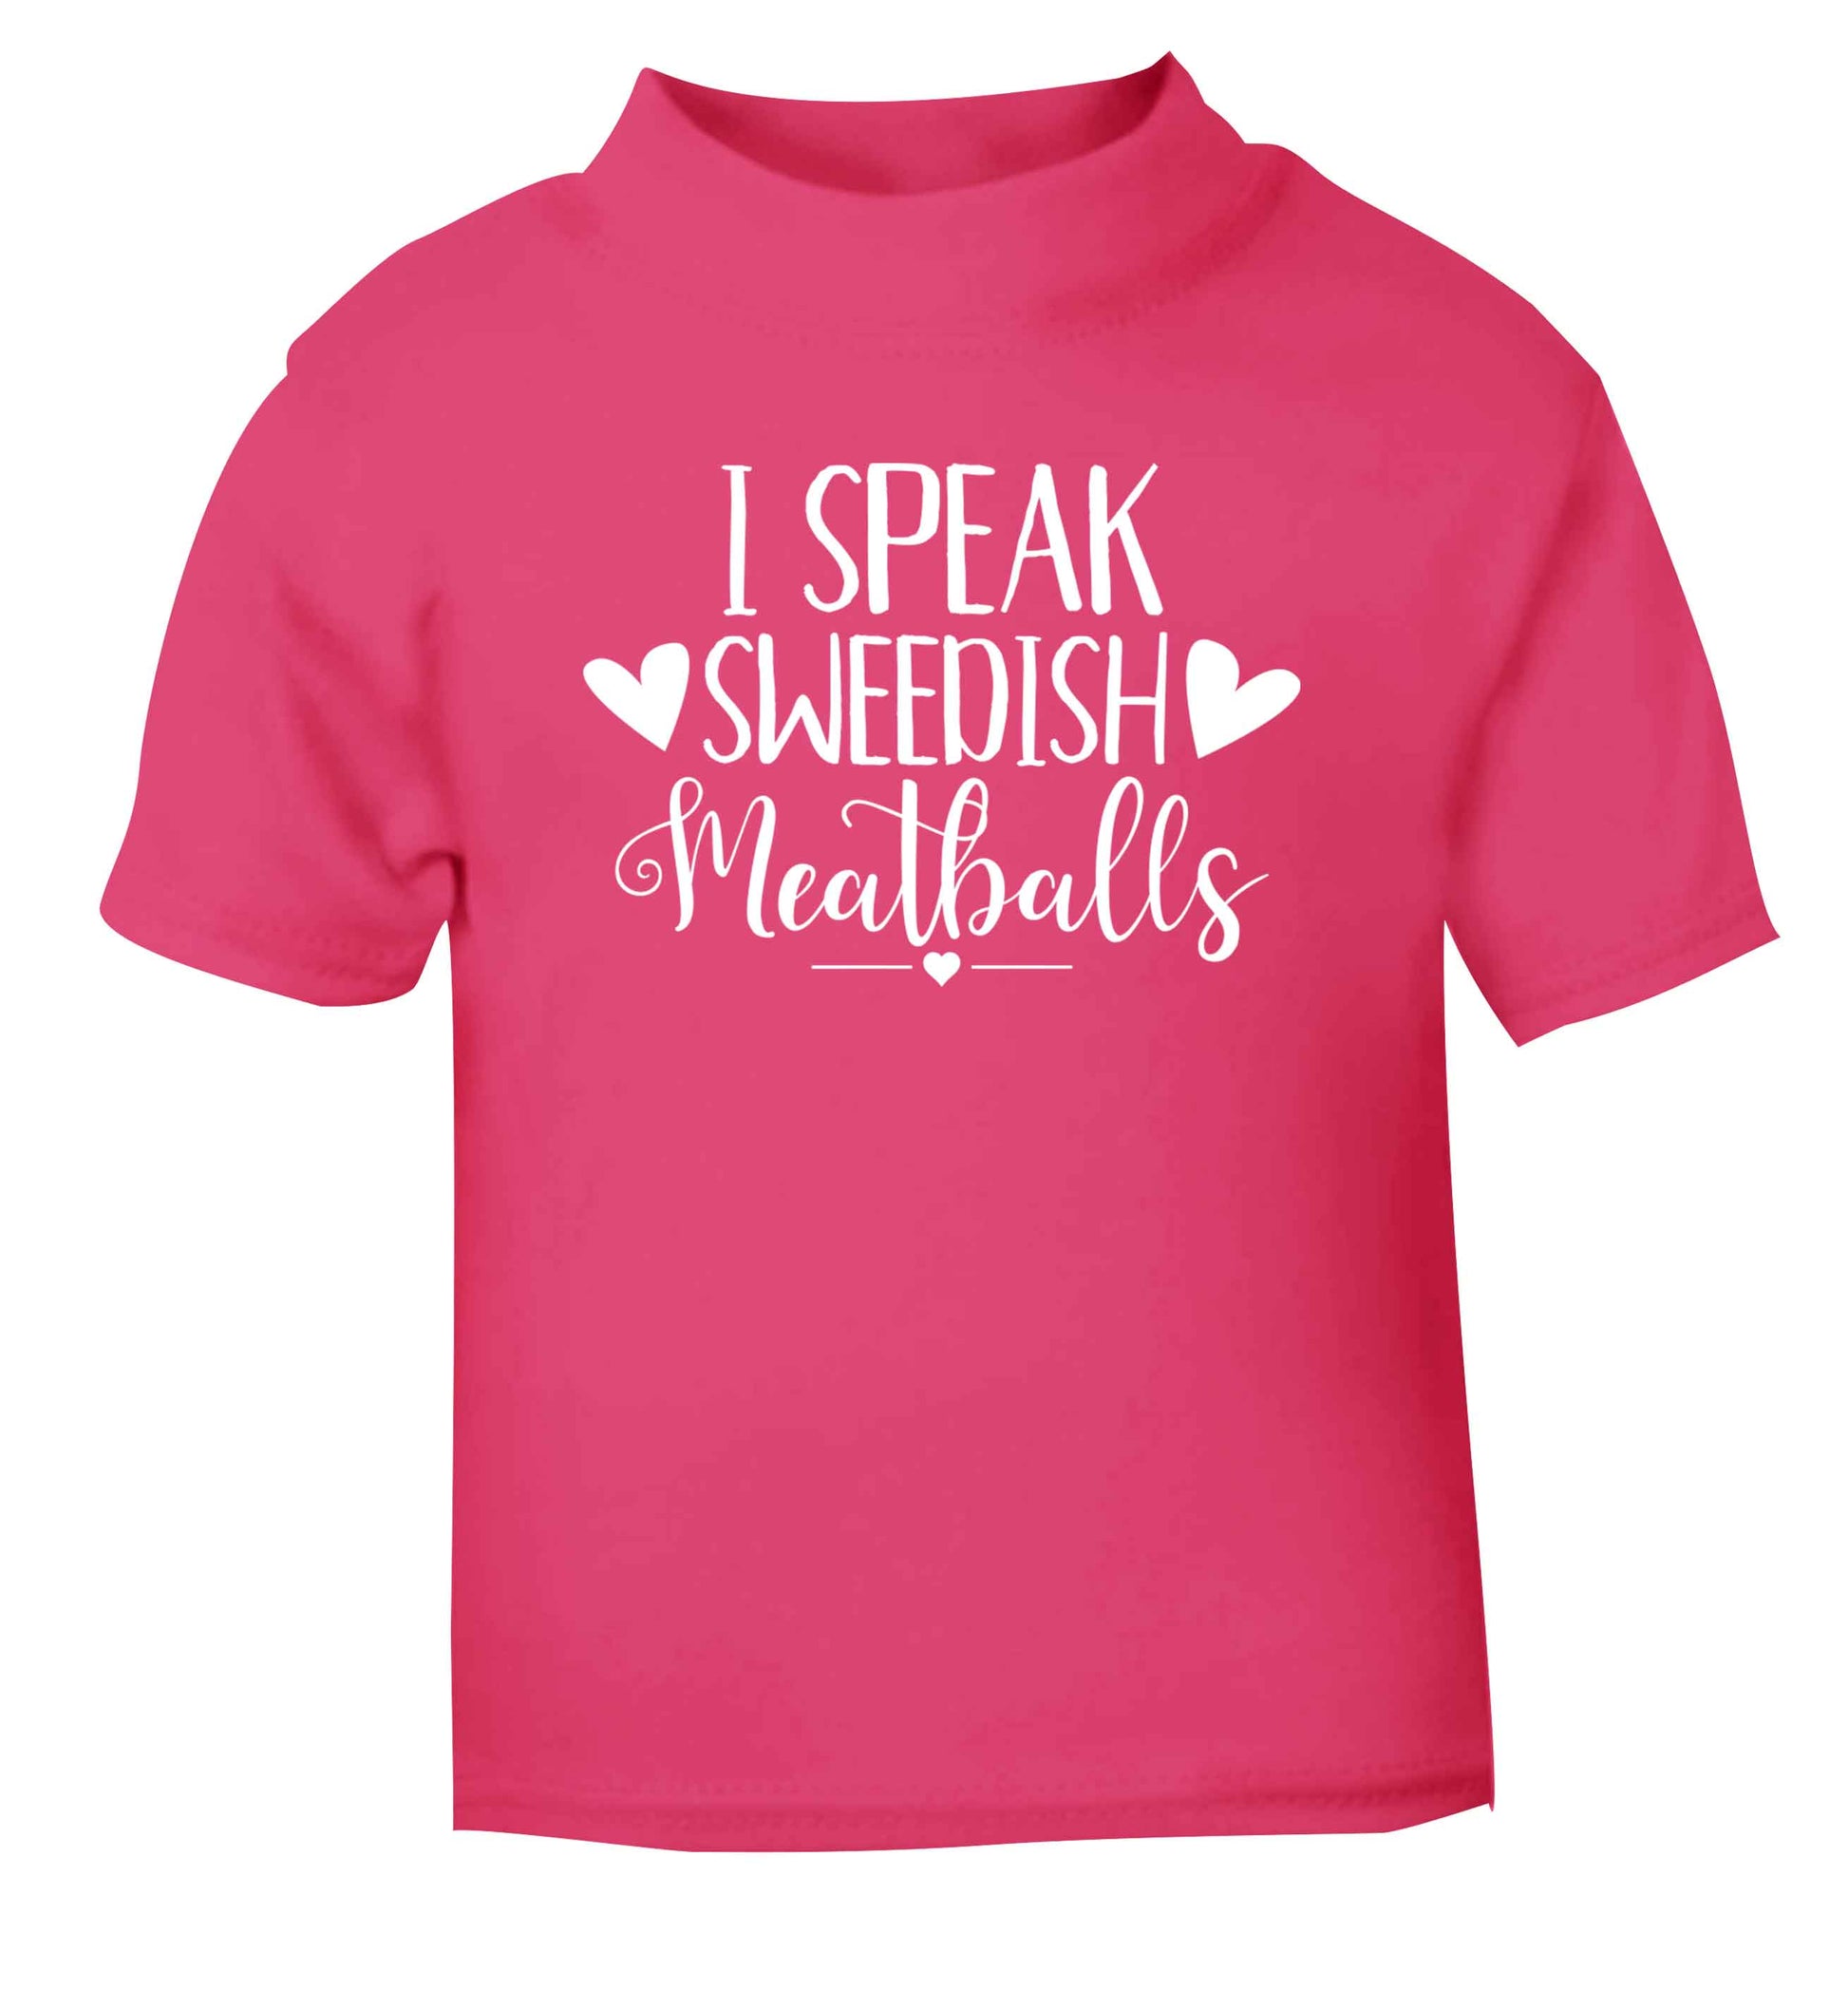 I speak sweedish...meatballs pink Baby Toddler Tshirt 2 Years